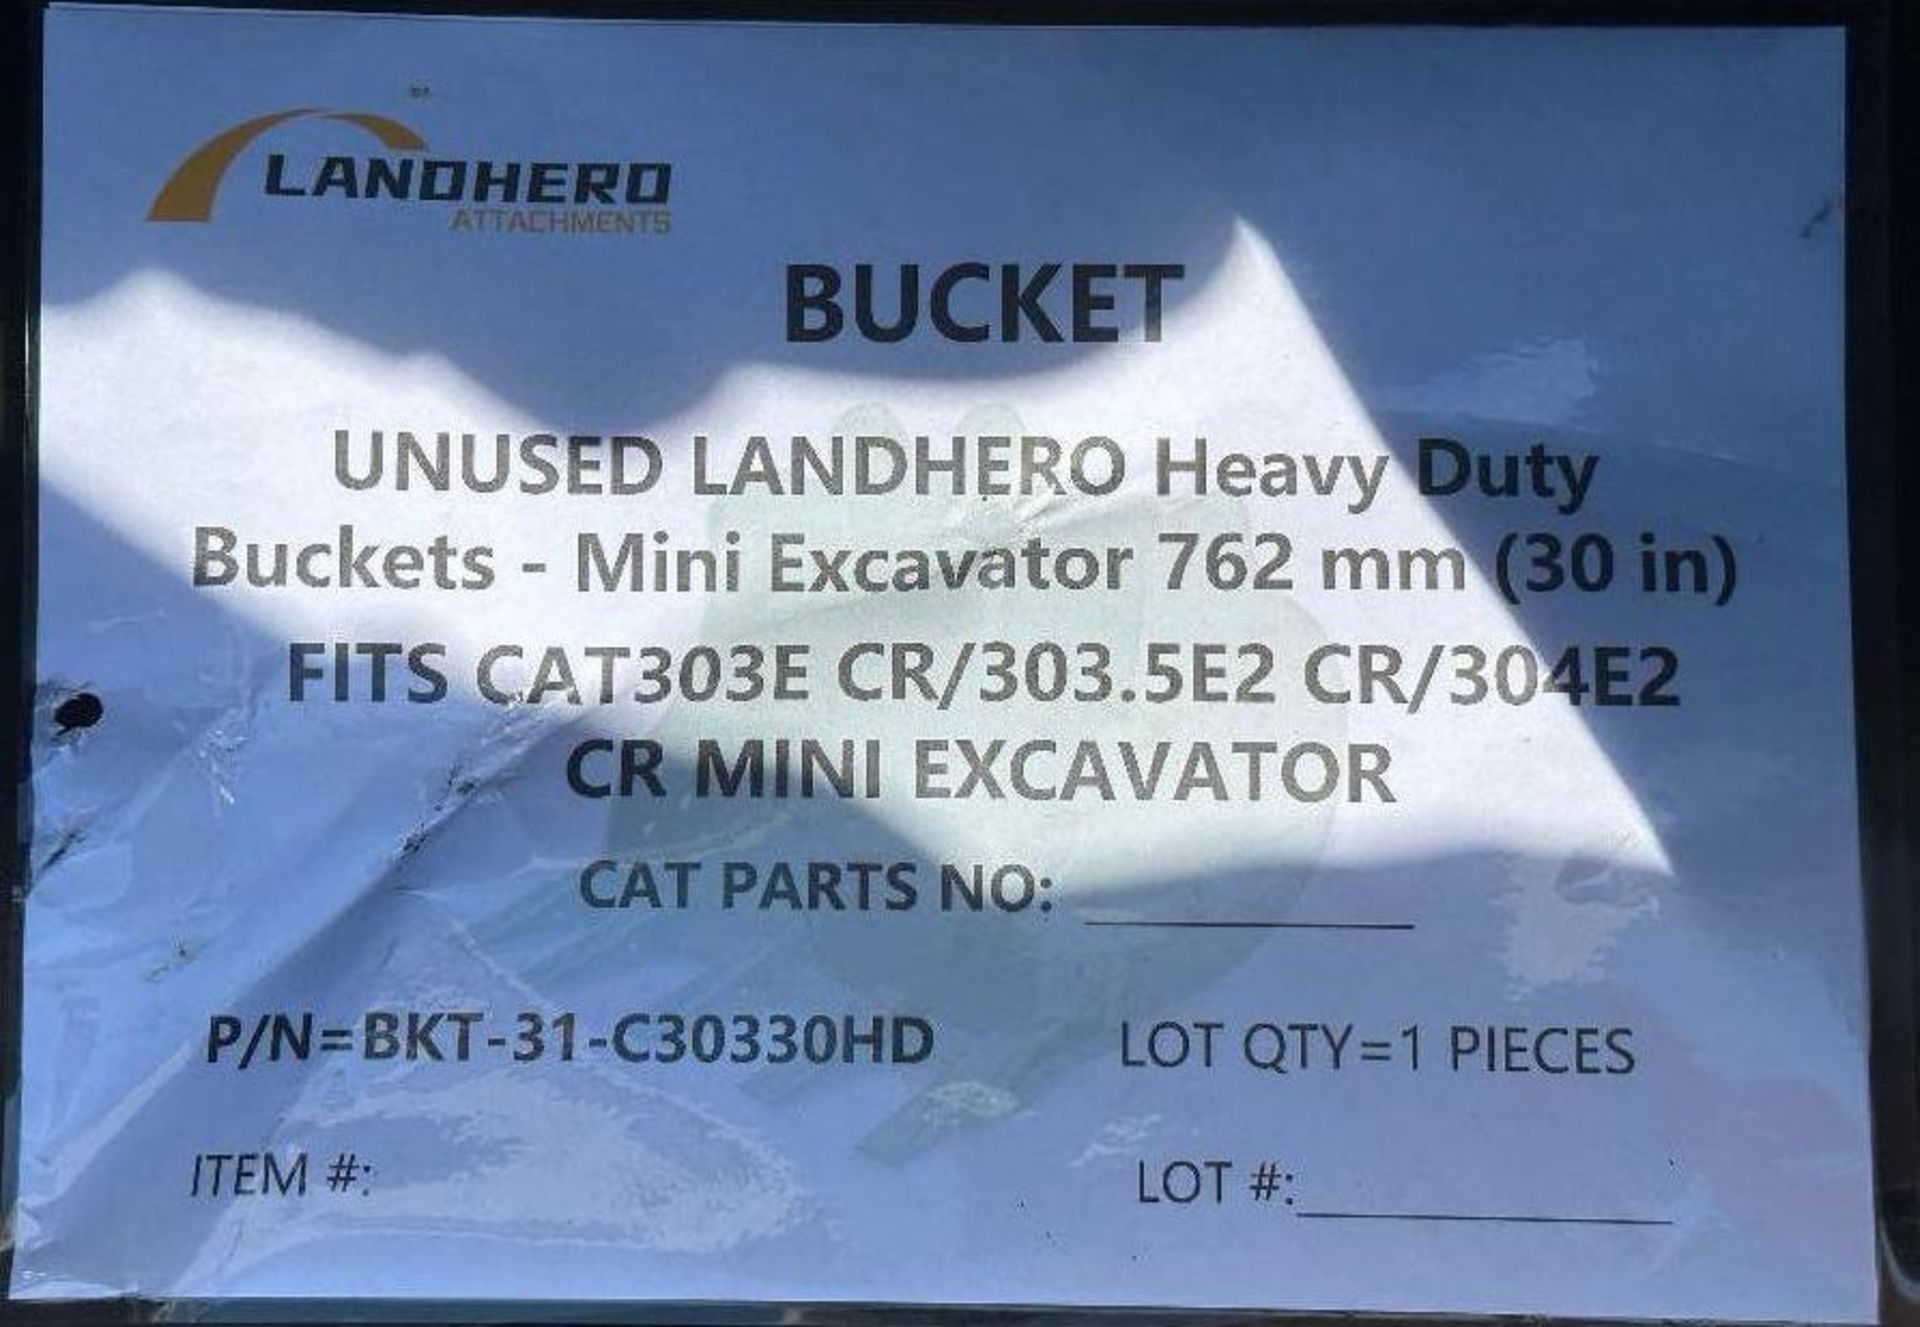 DESCRIPTION: 30" HEAVY DUTY MINI EXCAVATOR BUCKET ATTACHMENT BRAND / MODEL: LANDHERO BKT-31-C30330HD - Image 10 of 10